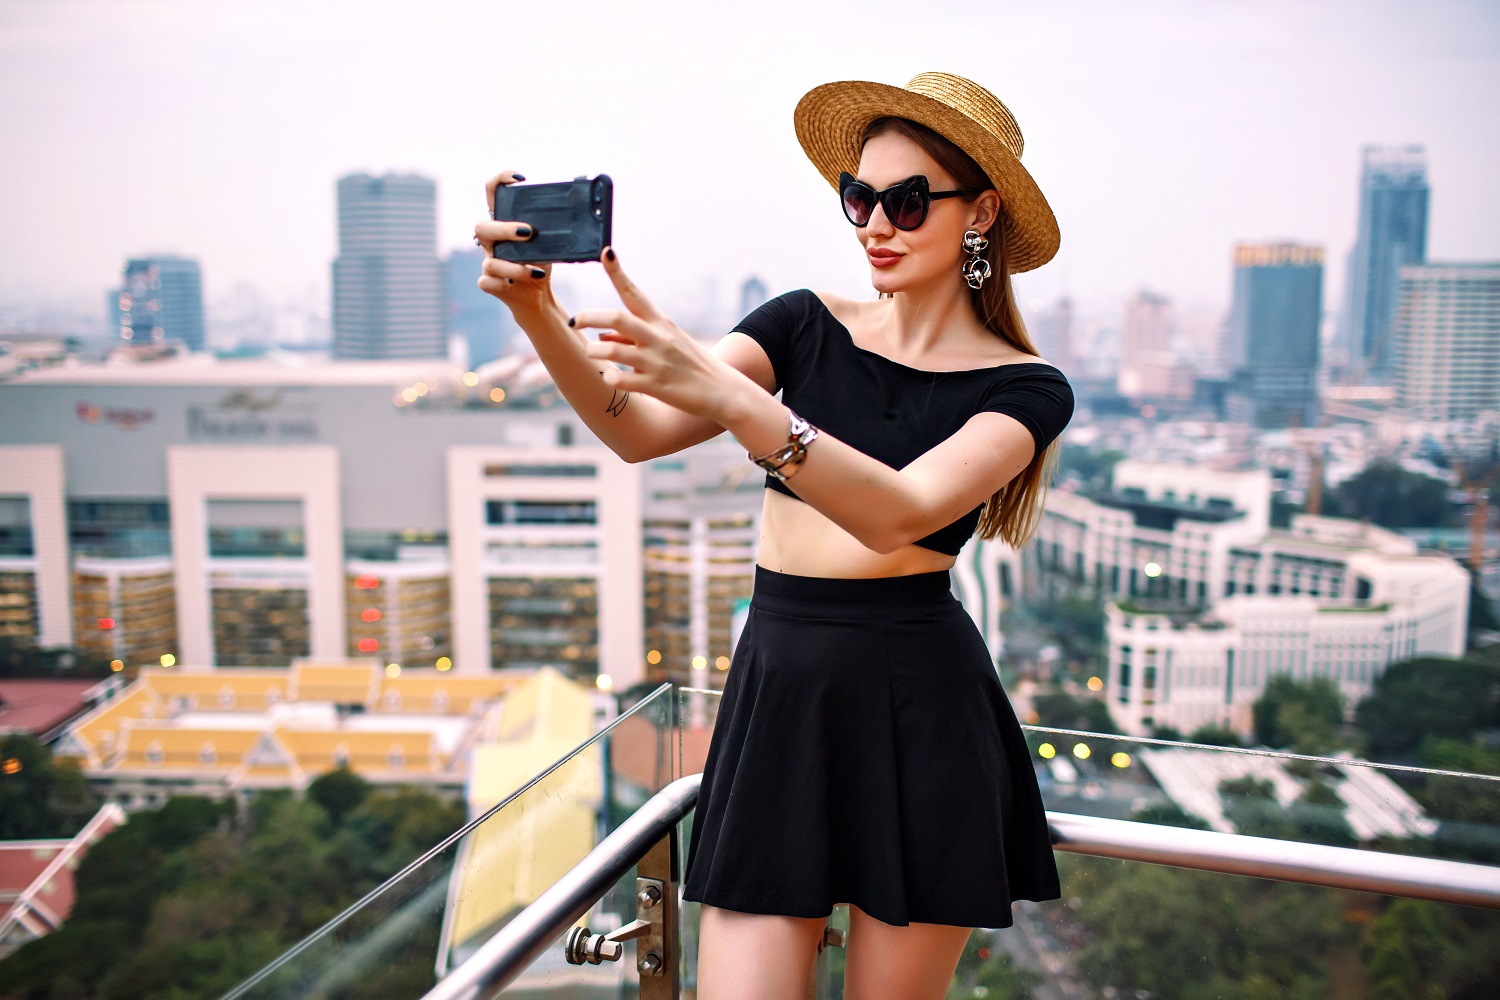 inluencer-marketing-modelka-selfie